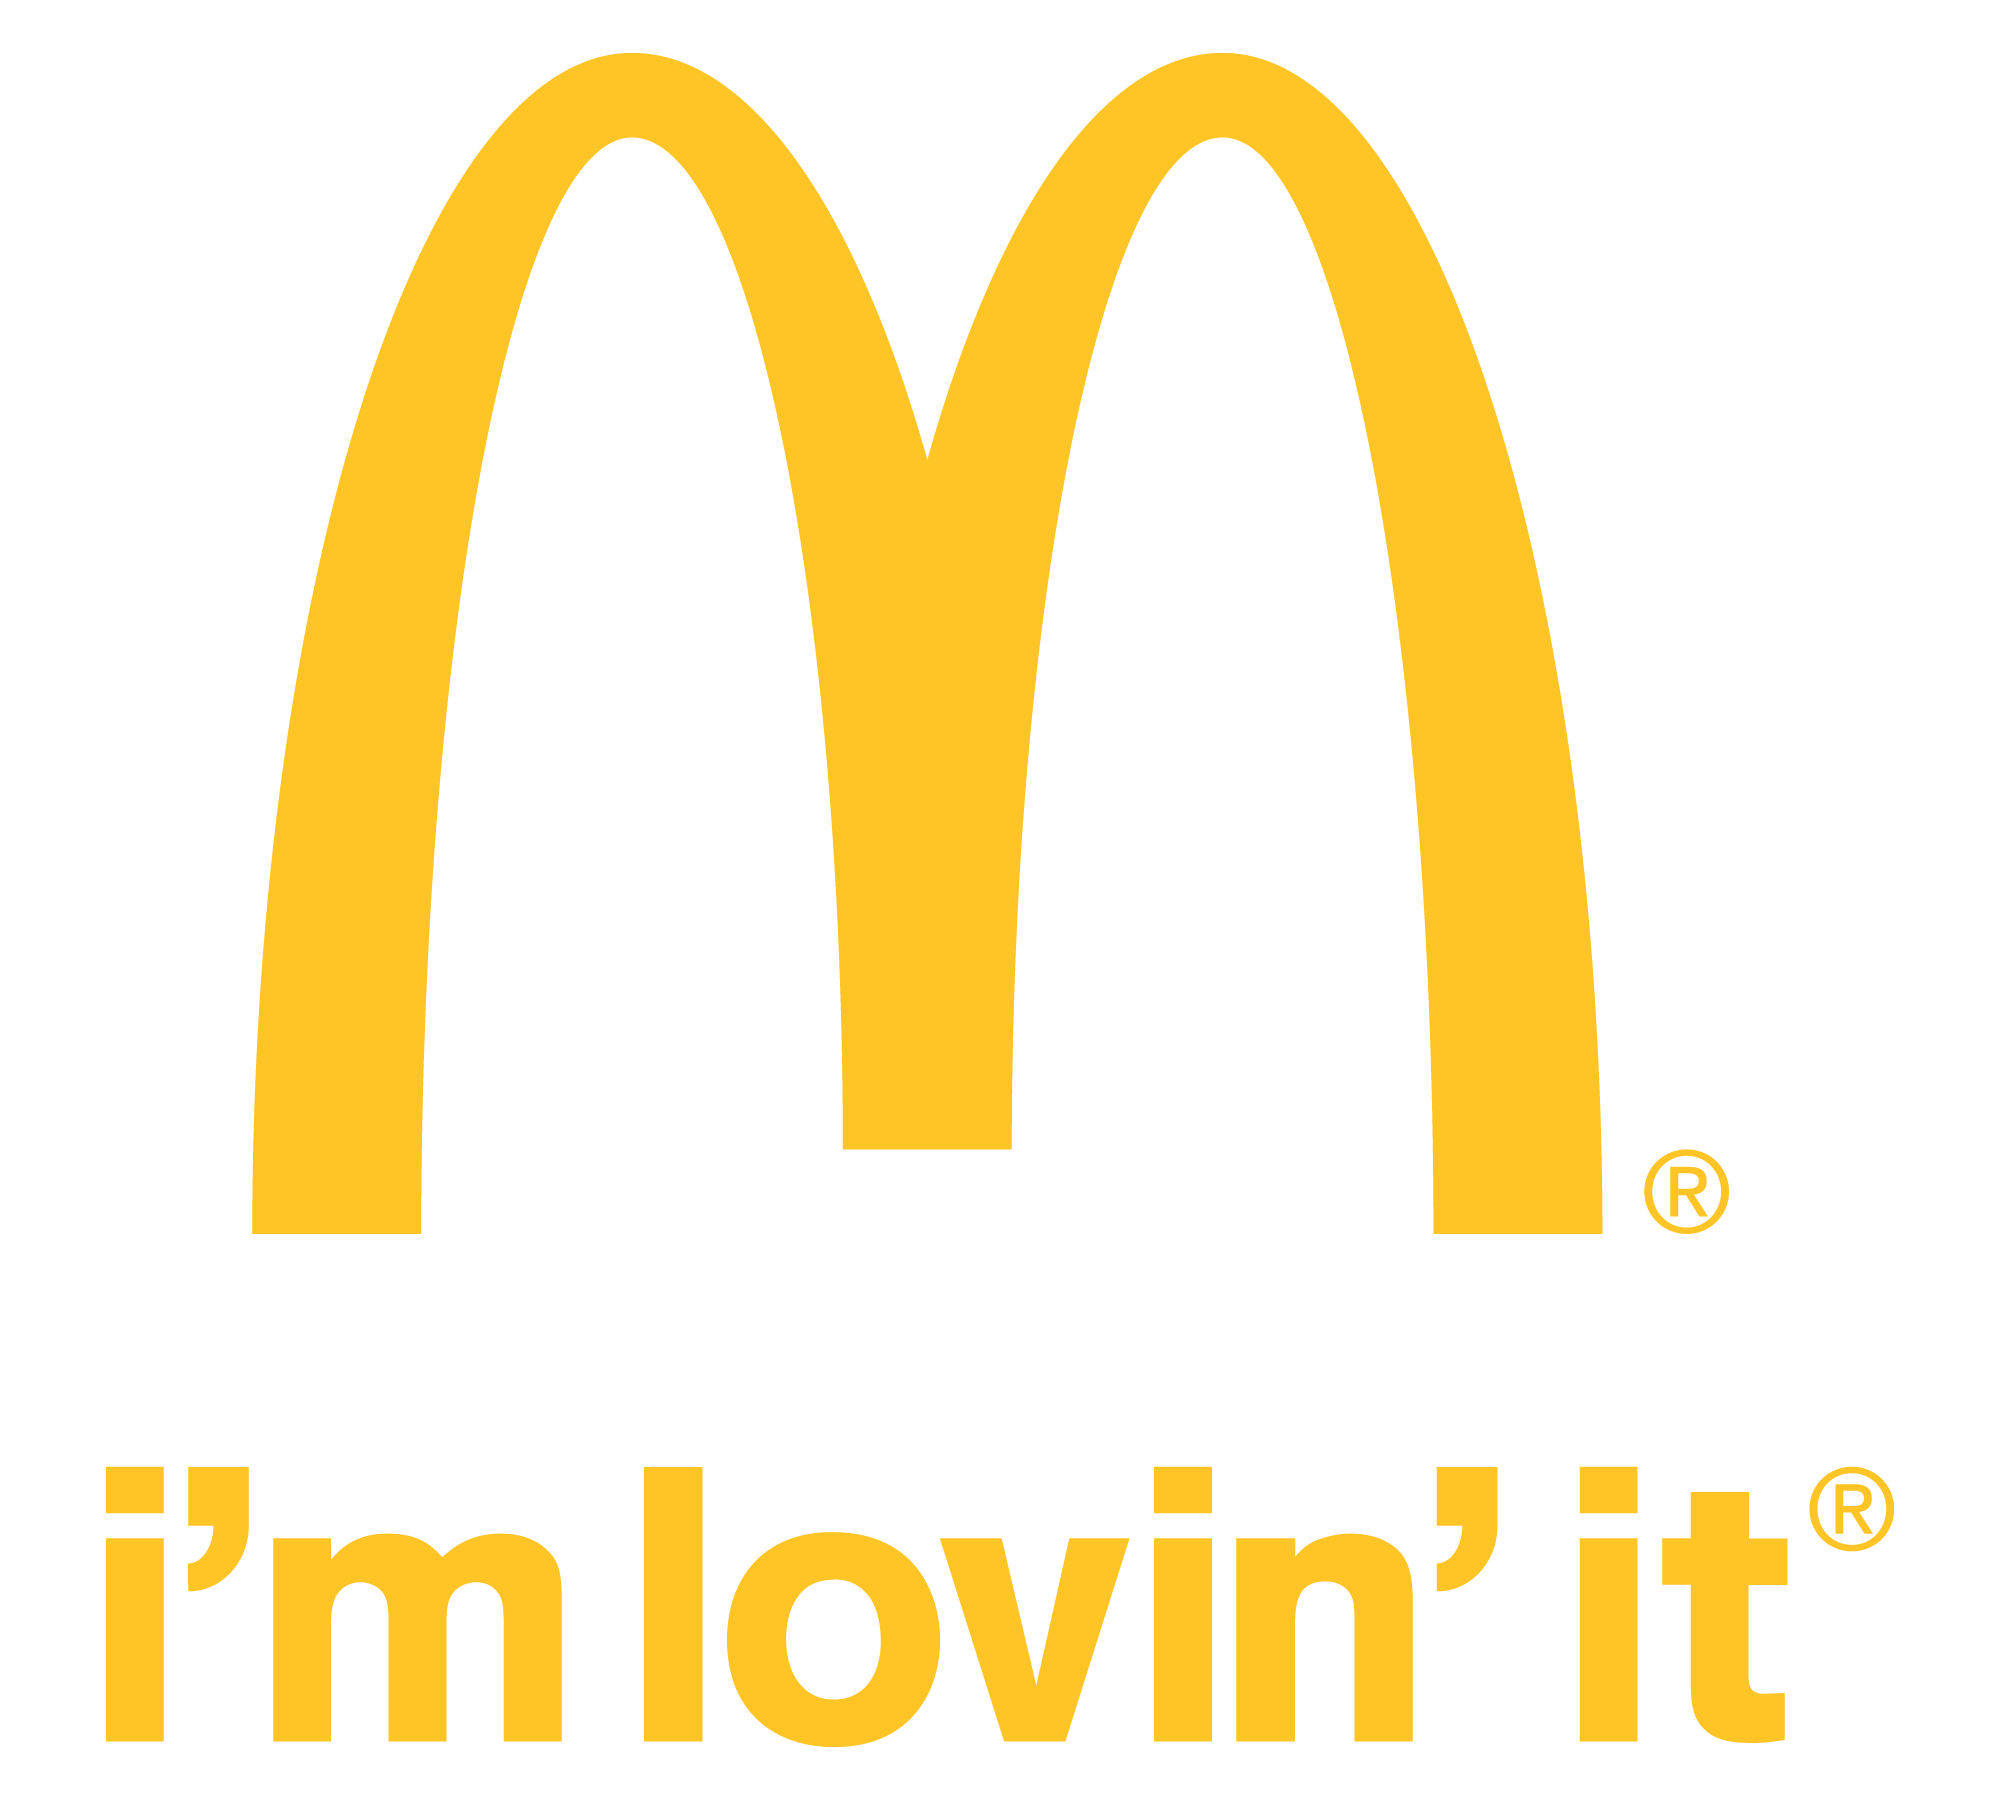 Mcdonald s logo. MCDONALD'S логотип. Фирменный знак Макдональдса. Старый логотип макдональдс. Флаг Макдональдса.